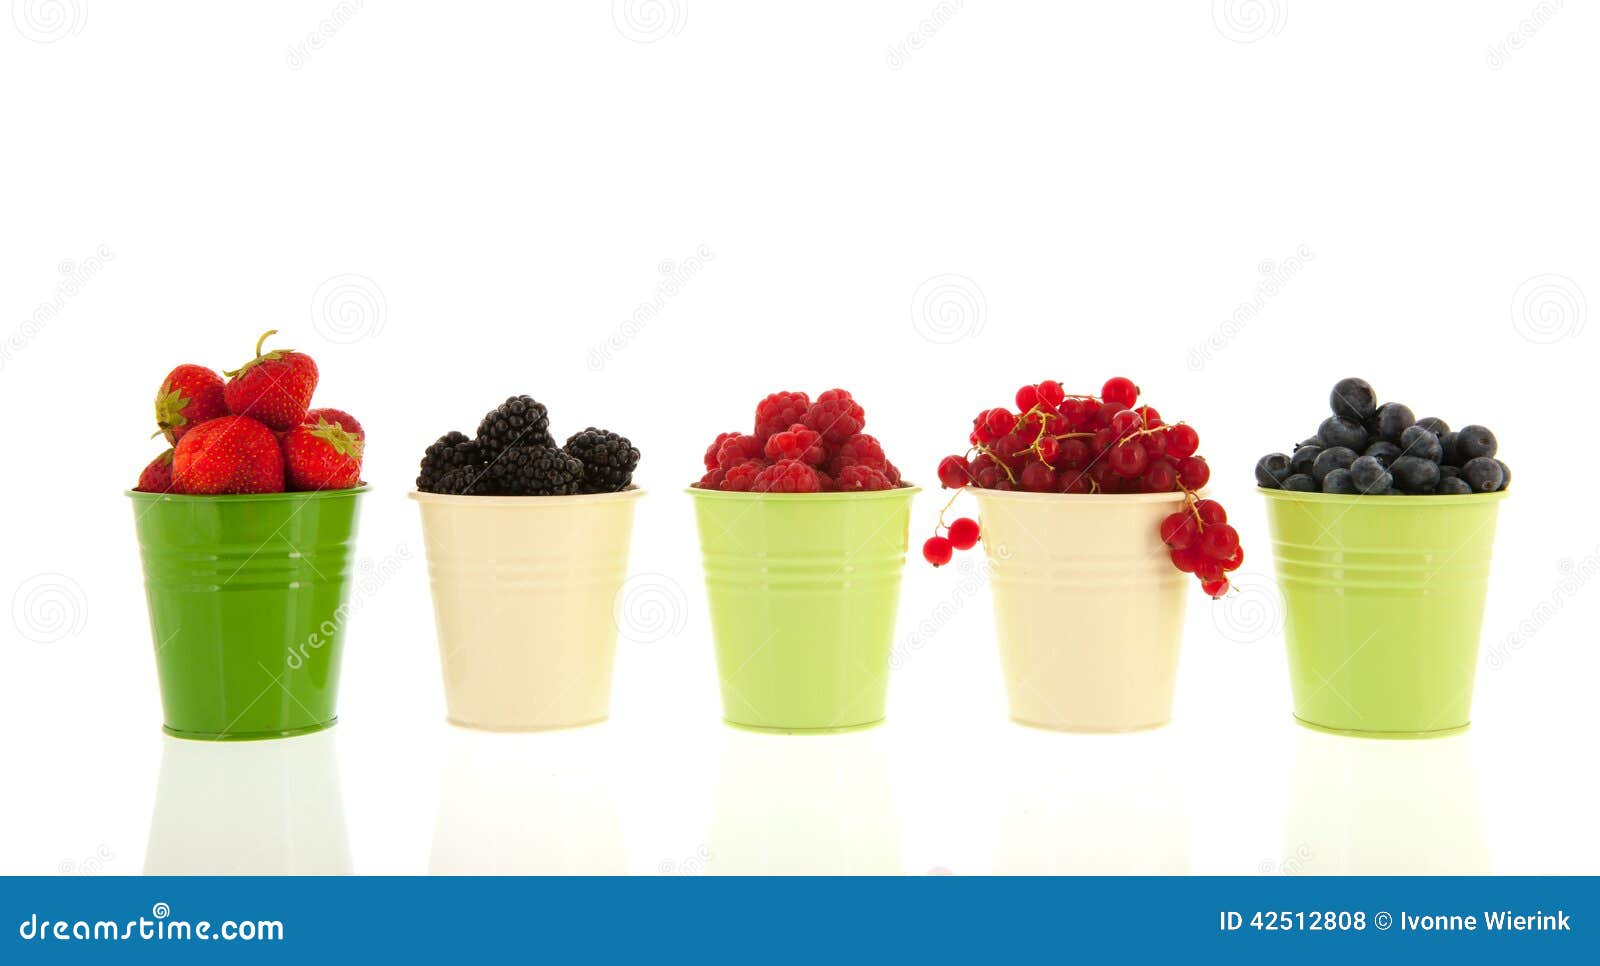 summer fruit in buckets